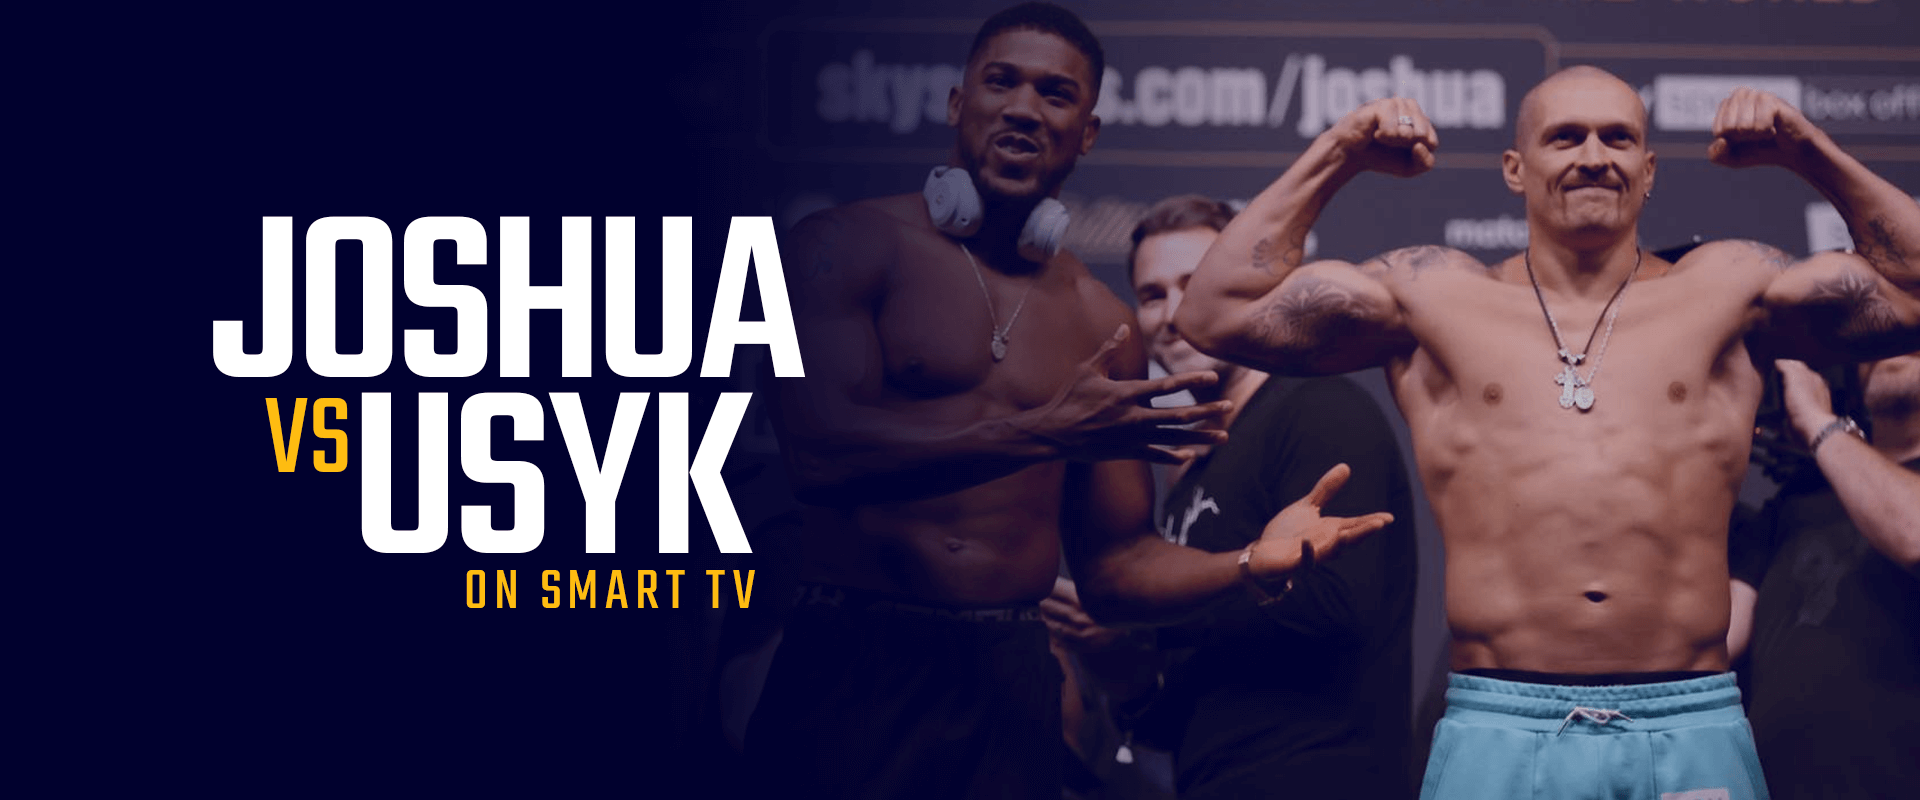 How to Watch Anthony Joshua vs Oleksandr Usyk 2 on Smart TV